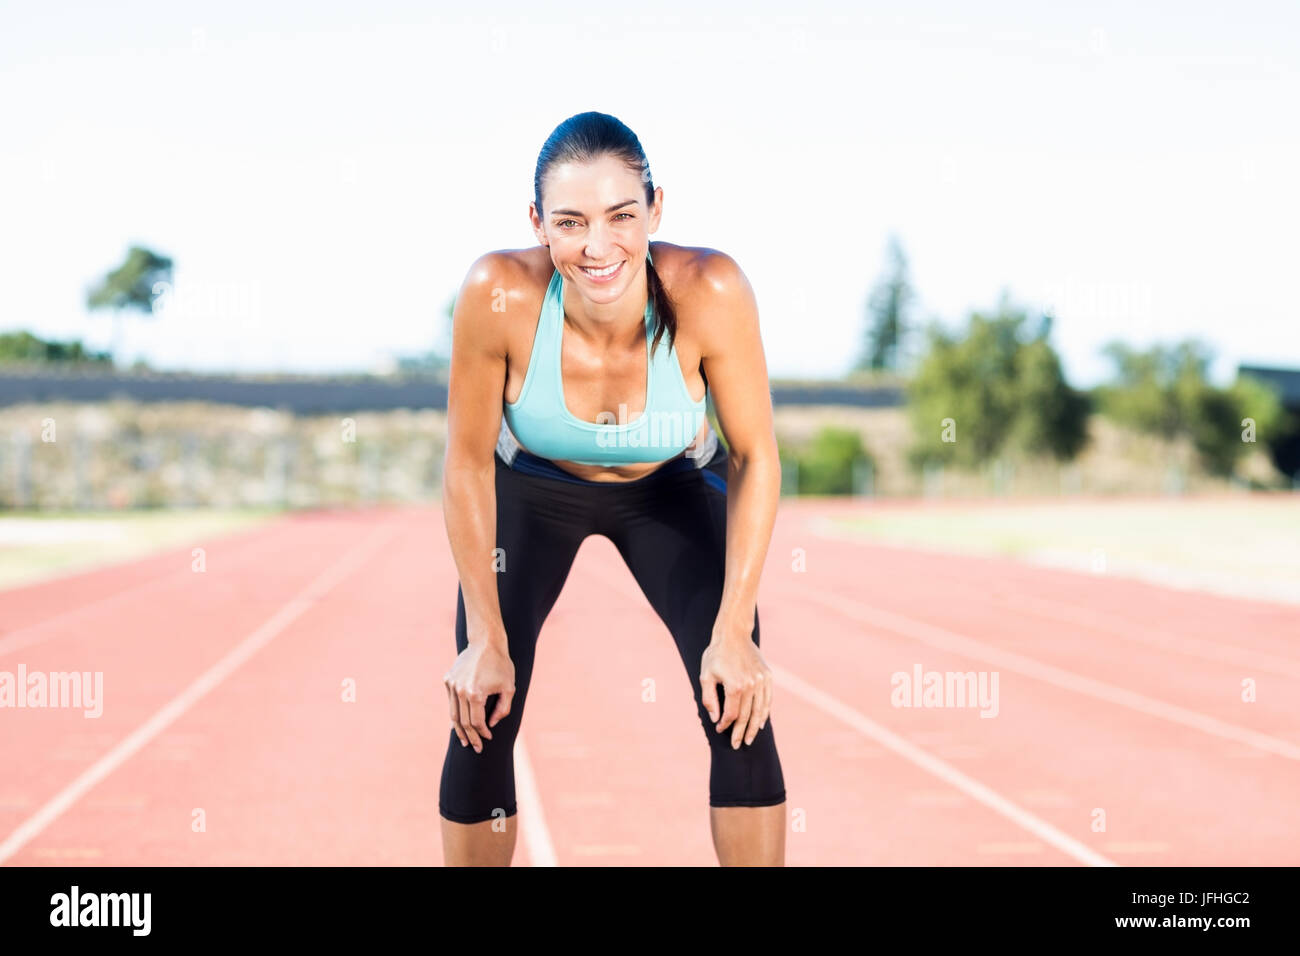 Tired female athlete standing on running track Stock Photo